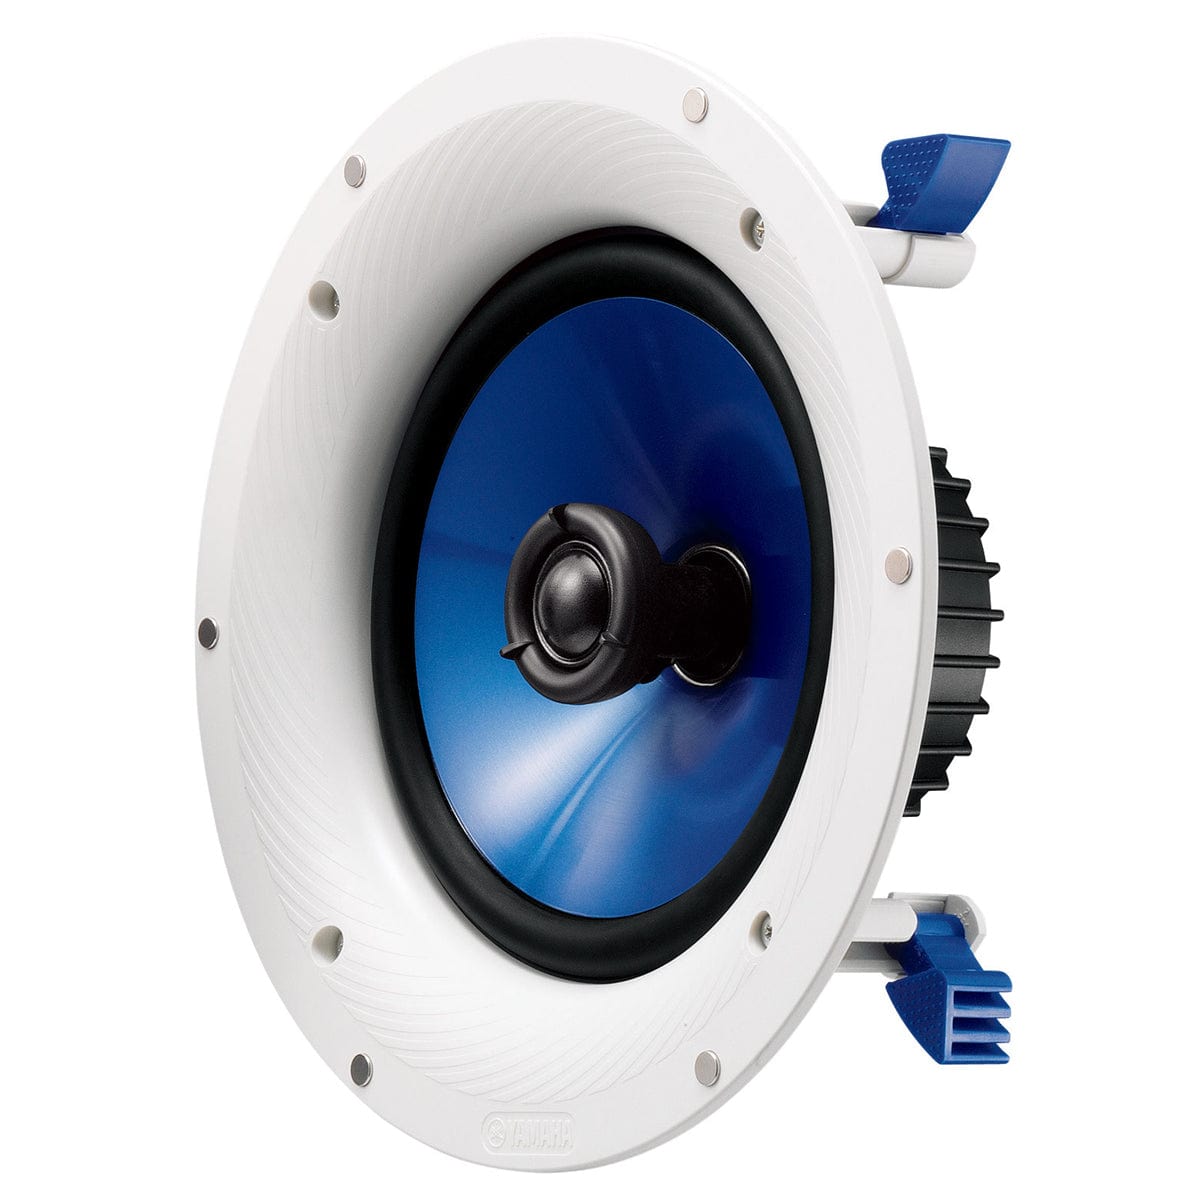 Yamaha NSIC800WH 8" In-Ceiling Speakers (Pair) | Atlantic Electrics